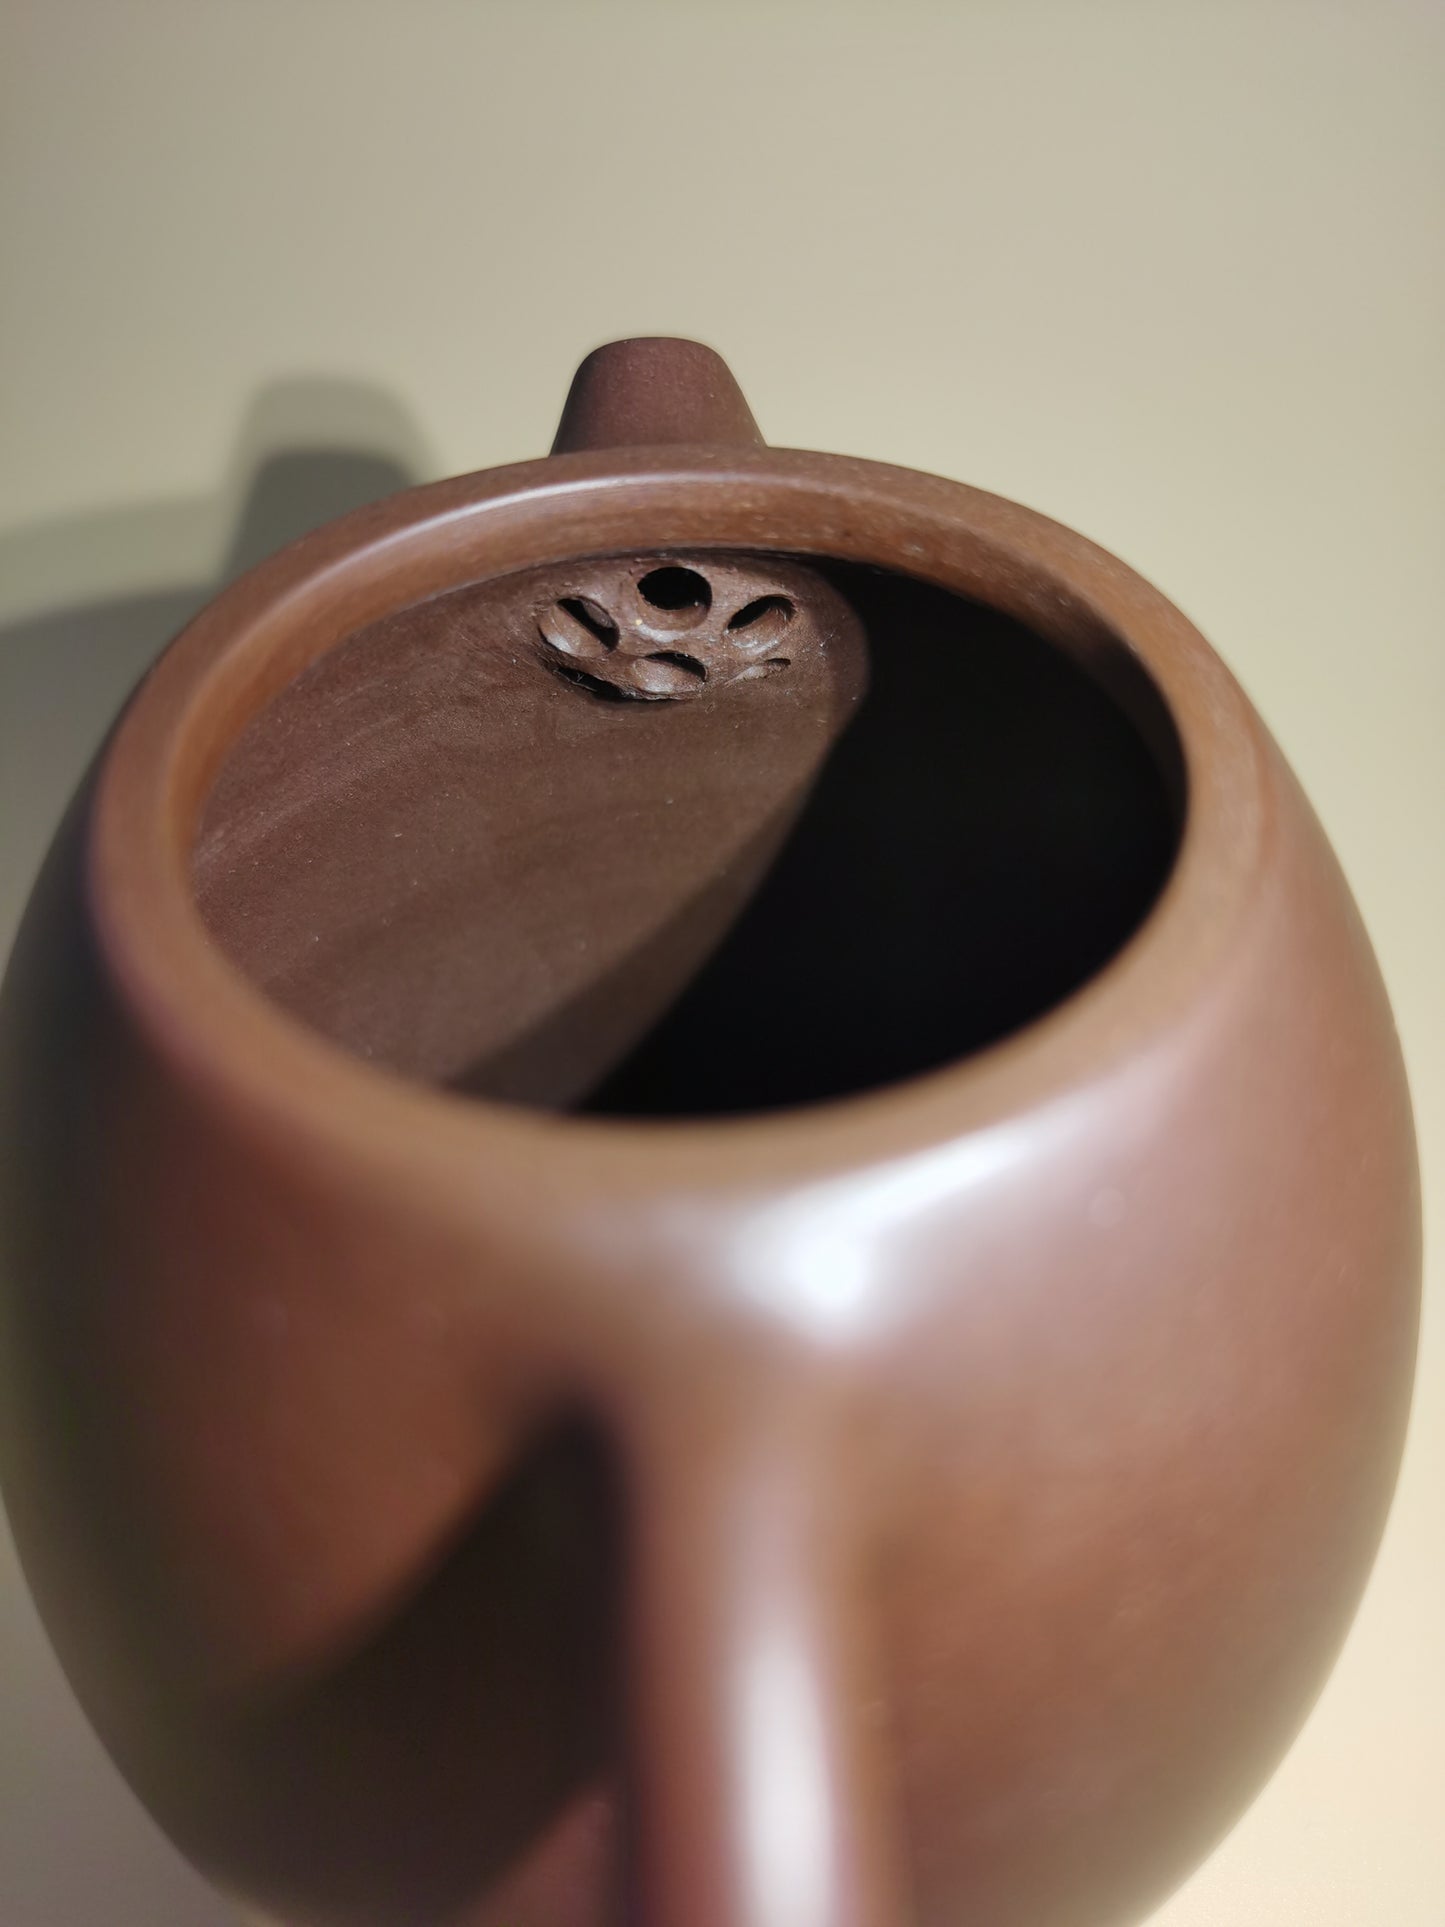 Siyutao teapot dragon egg handcrafted 210ml